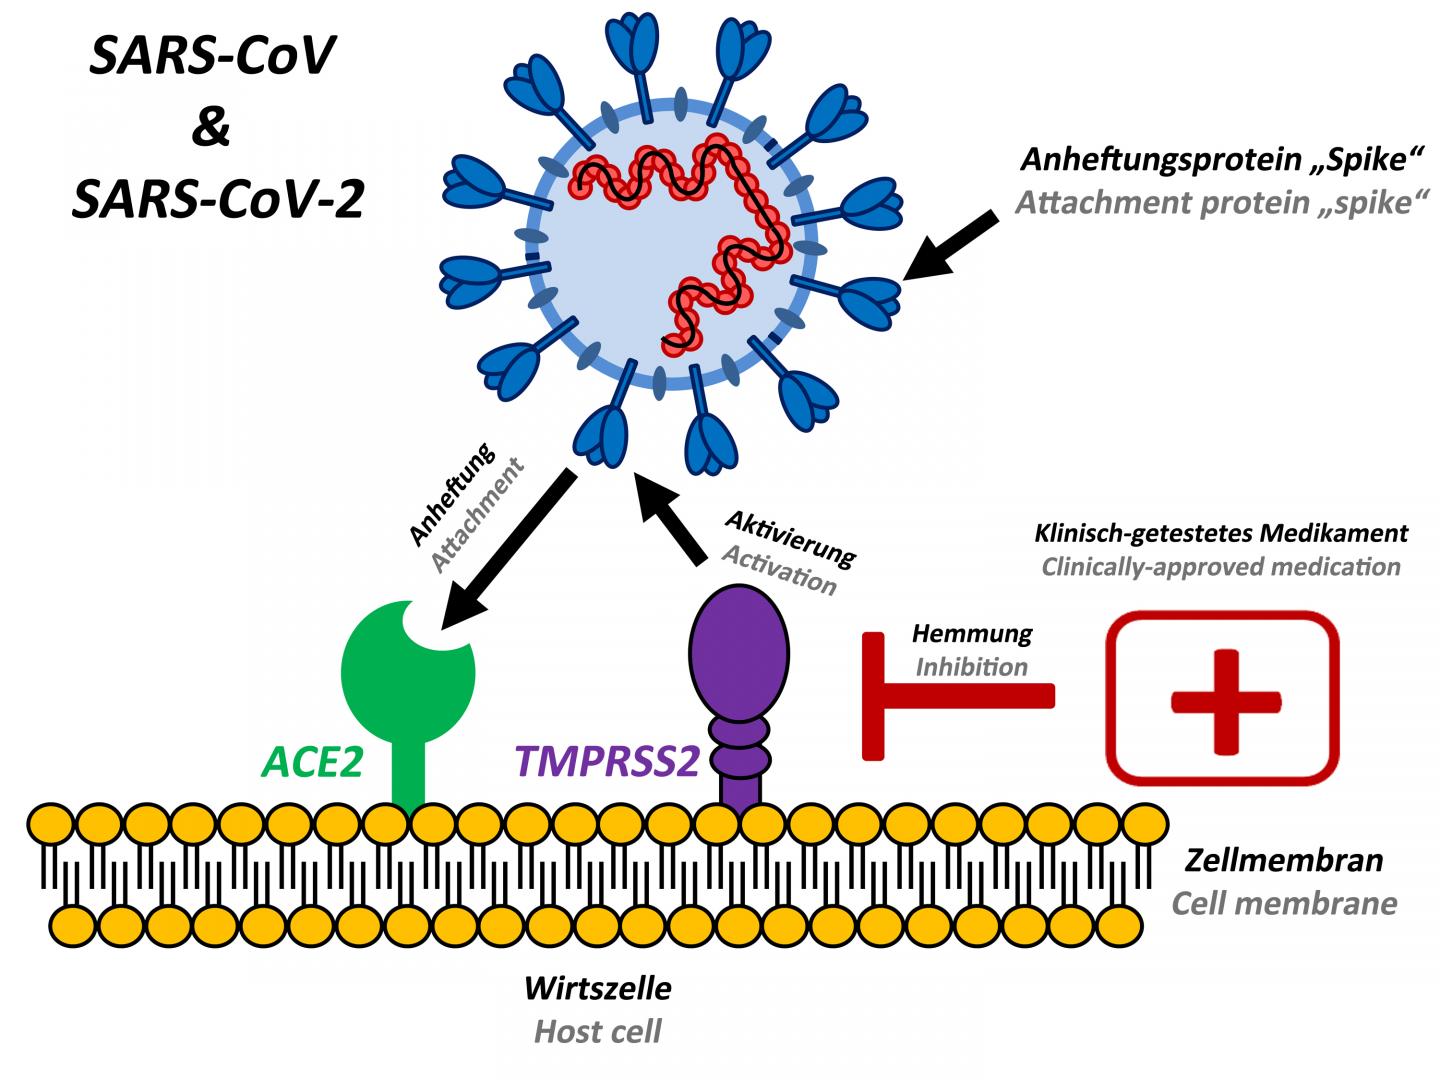 Blocking SARS-CoV-2 cell entry